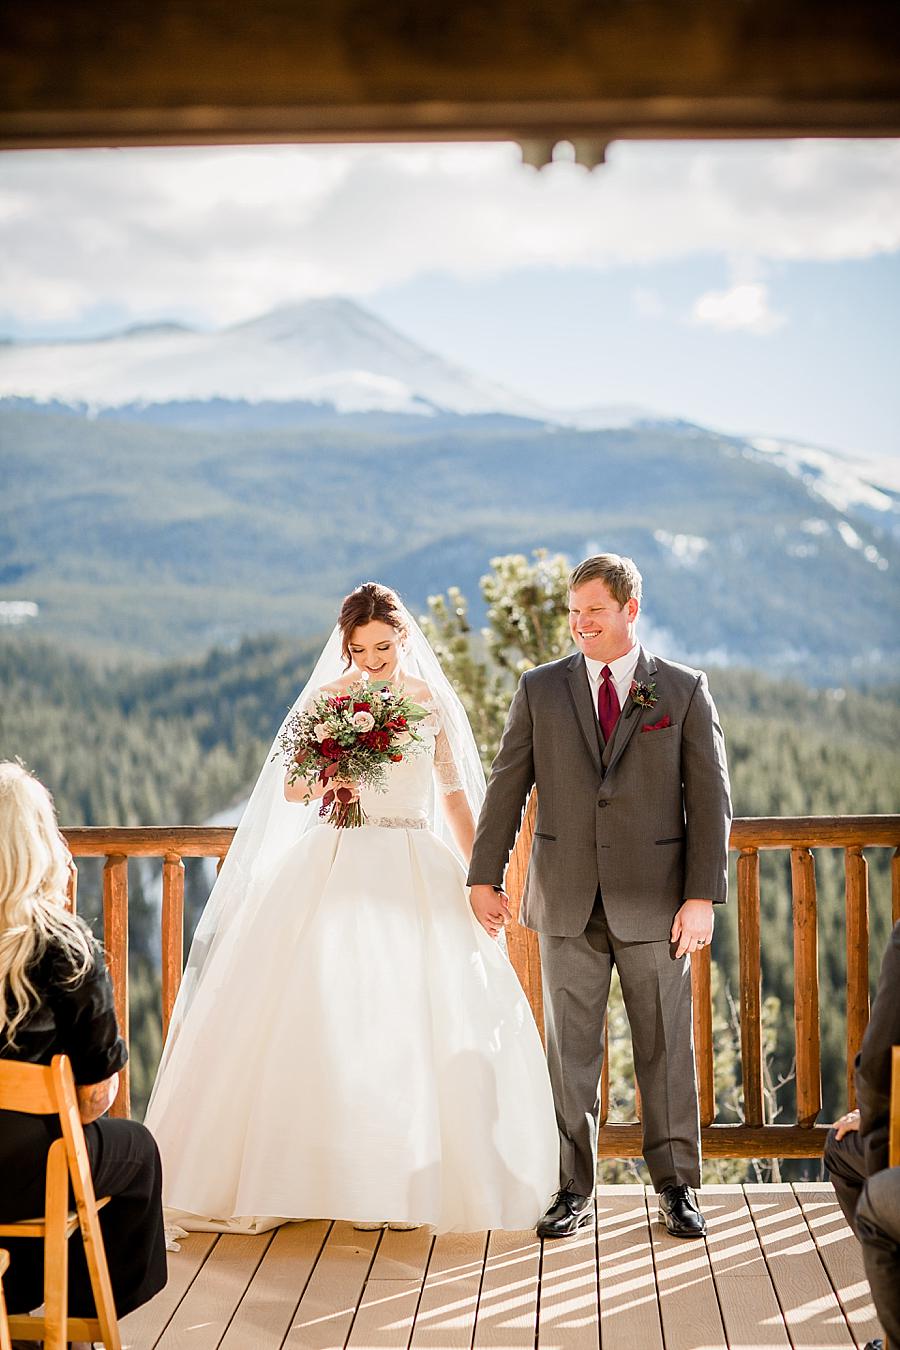 Recessional at this Colorado Destination Wedding by Knoxville Wedding Photographer, Amanda May Photos.